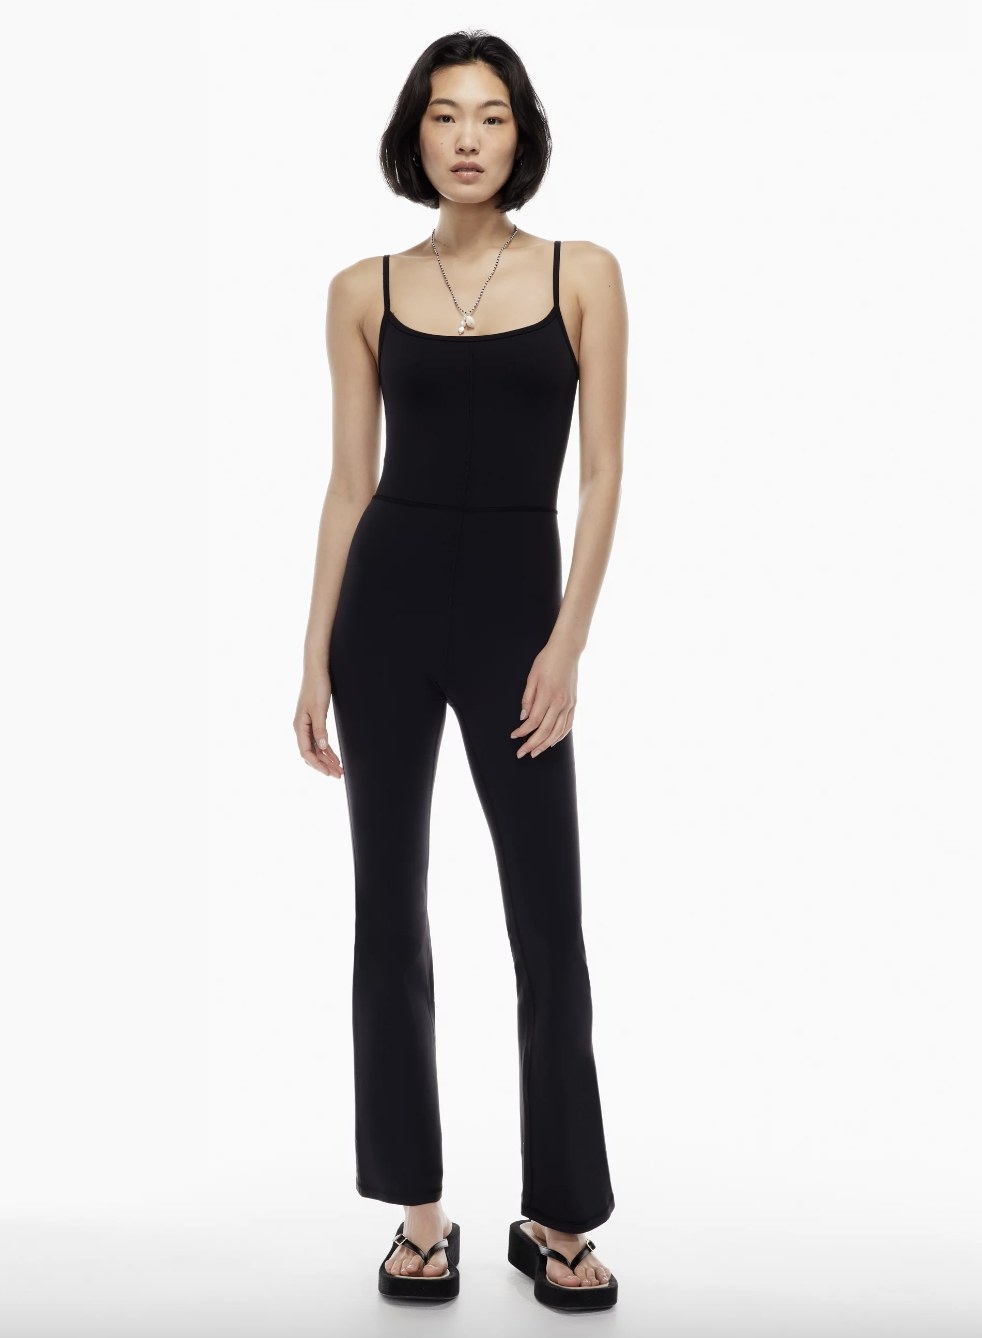 model wearing black sleeveless jumpsuit